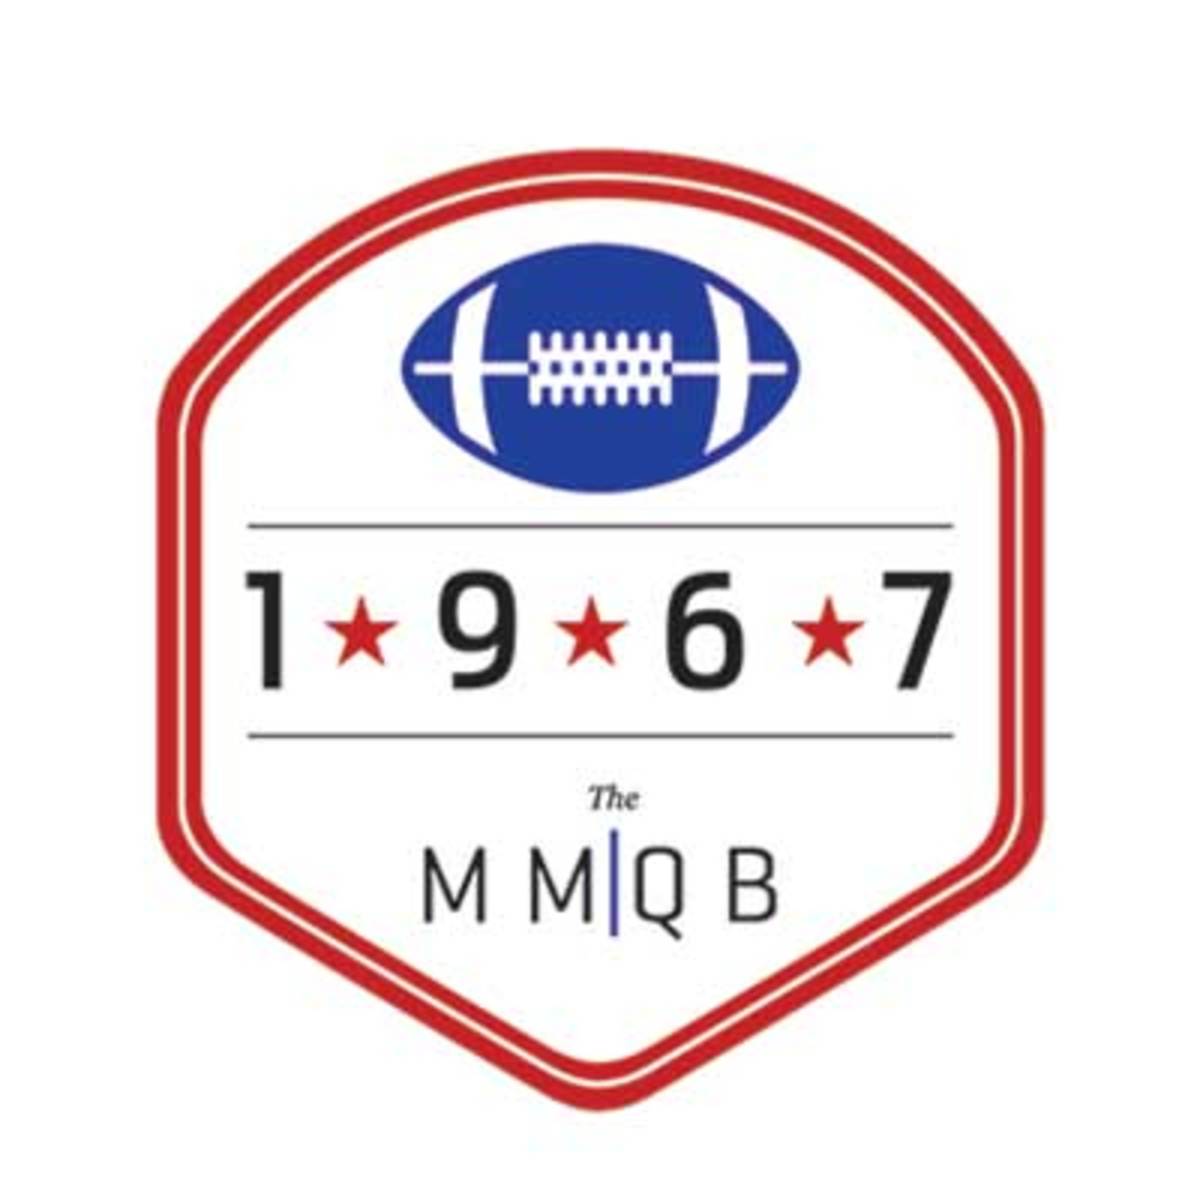 1967-mmqb-logo-400.jpg